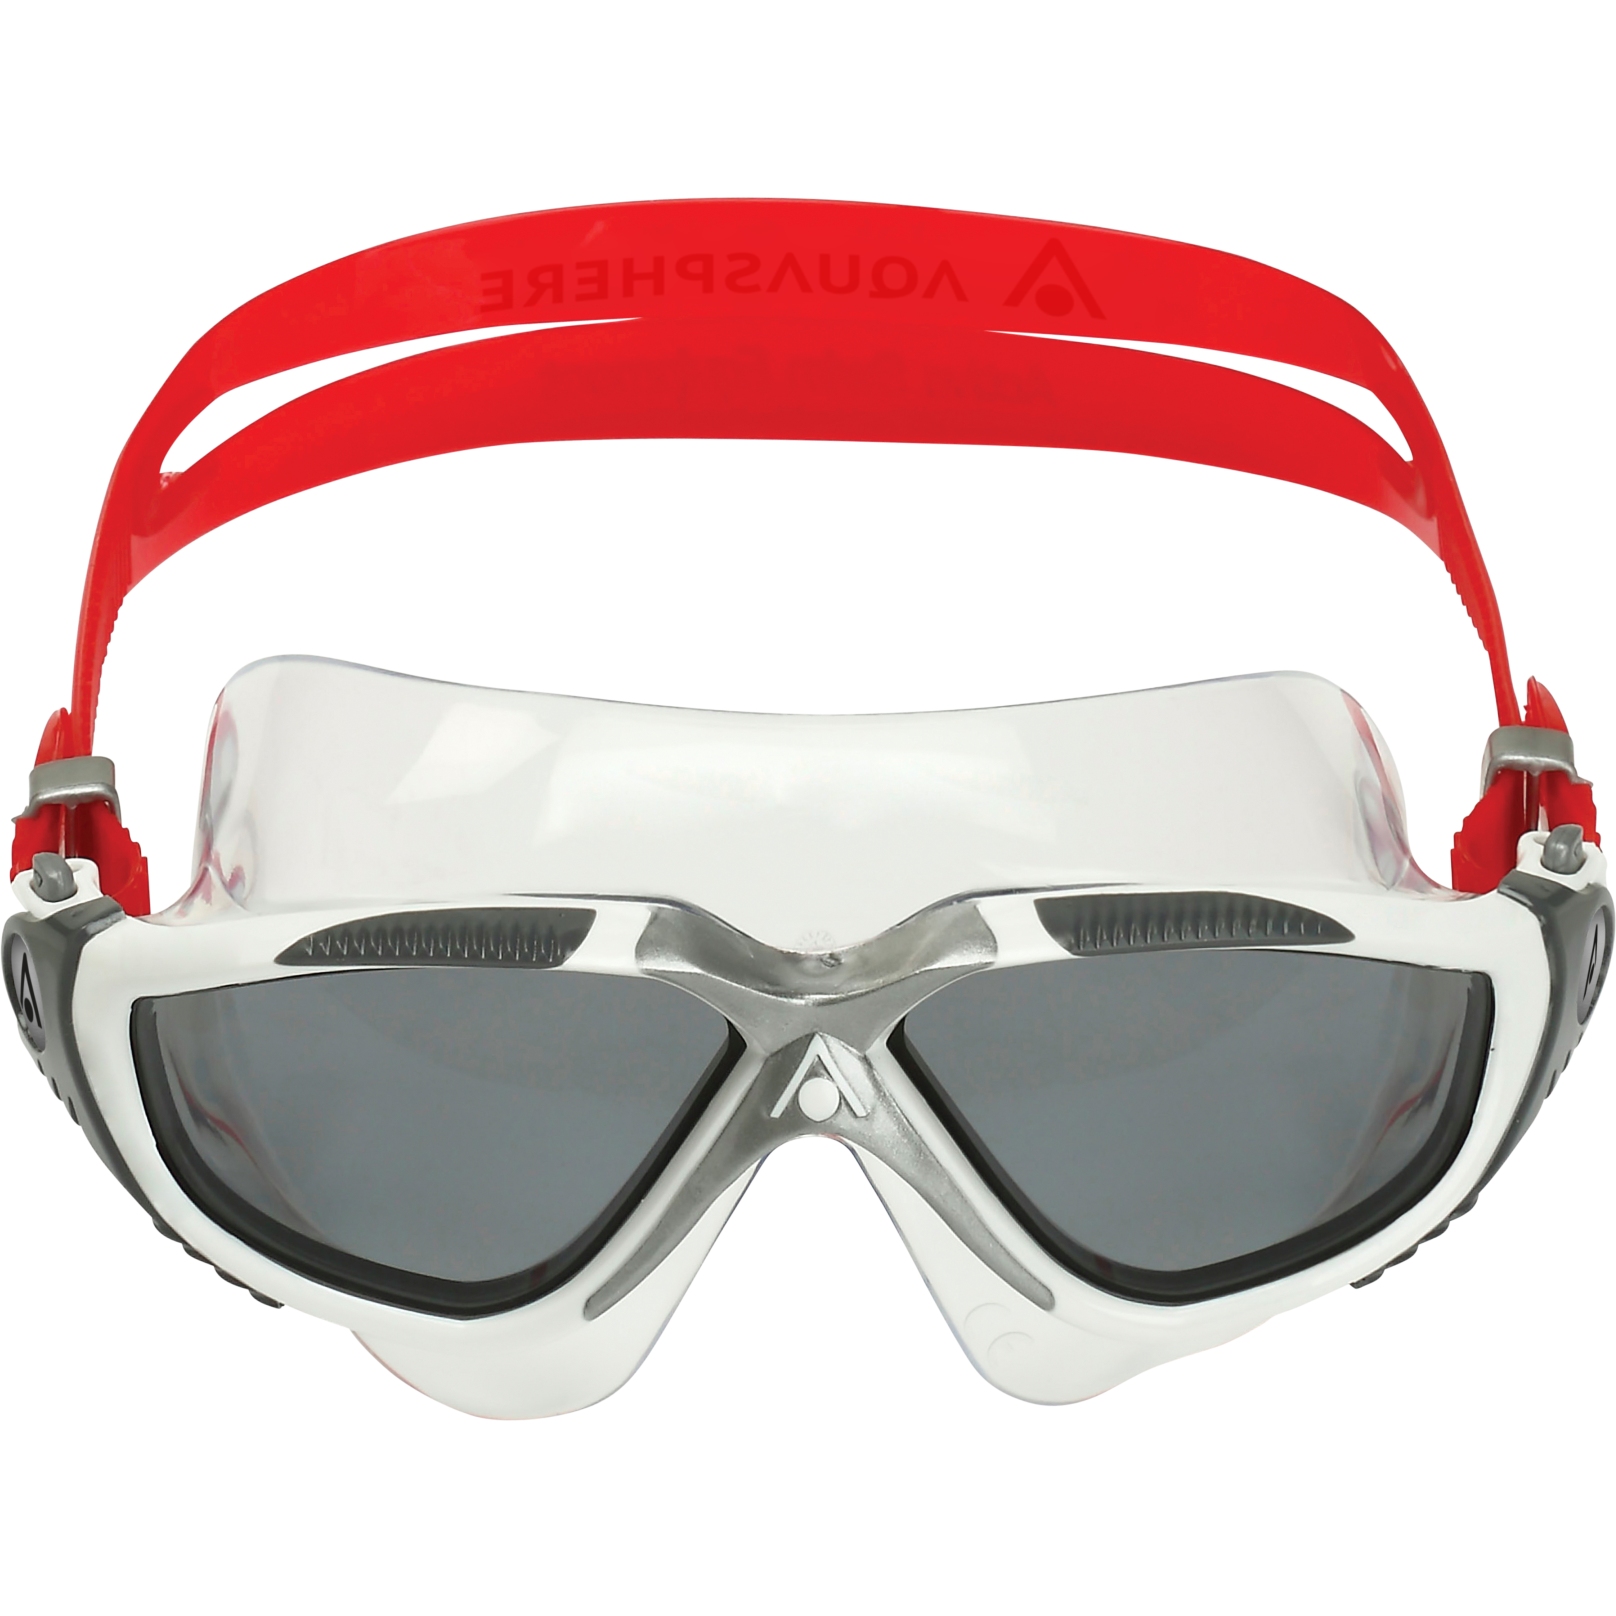 Picture of AQUASPHERE Vista Swim Goggles - Smoke Tinted - White/Red